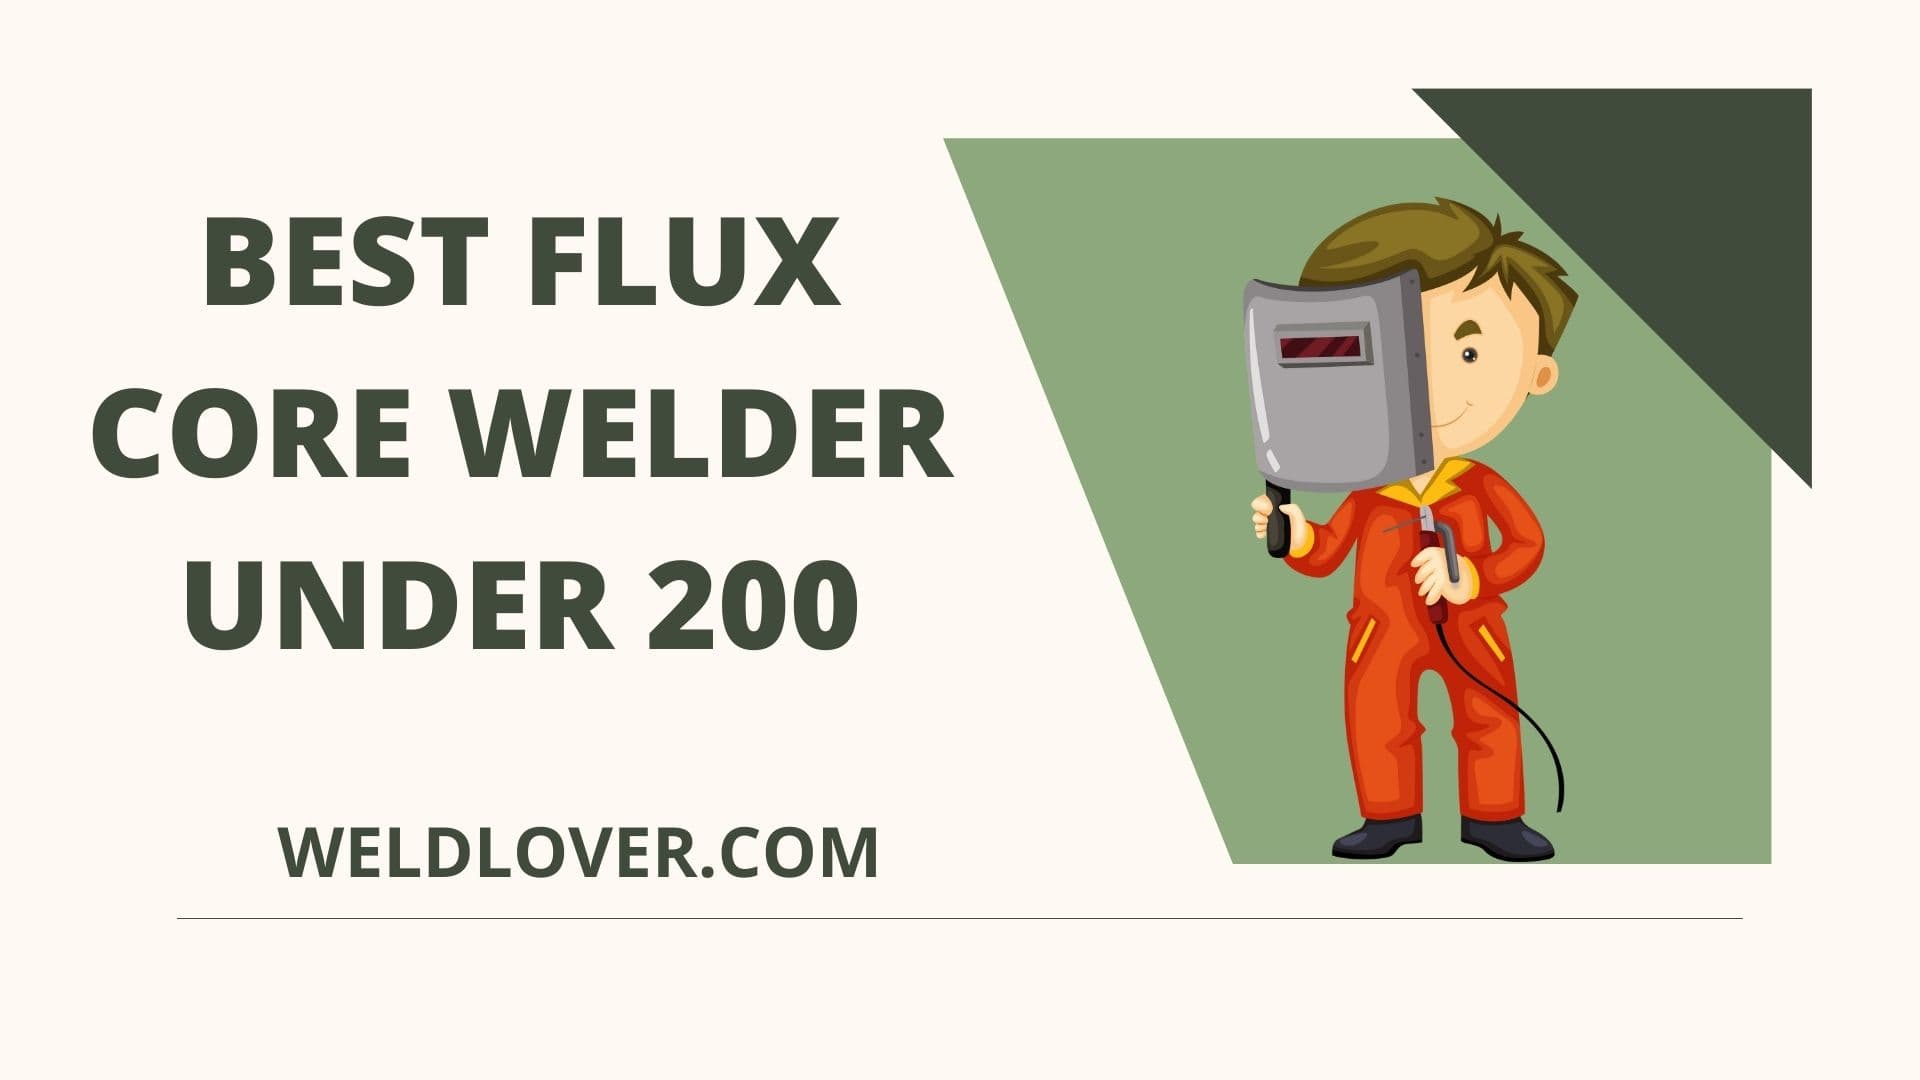 Best flux core welder under 200